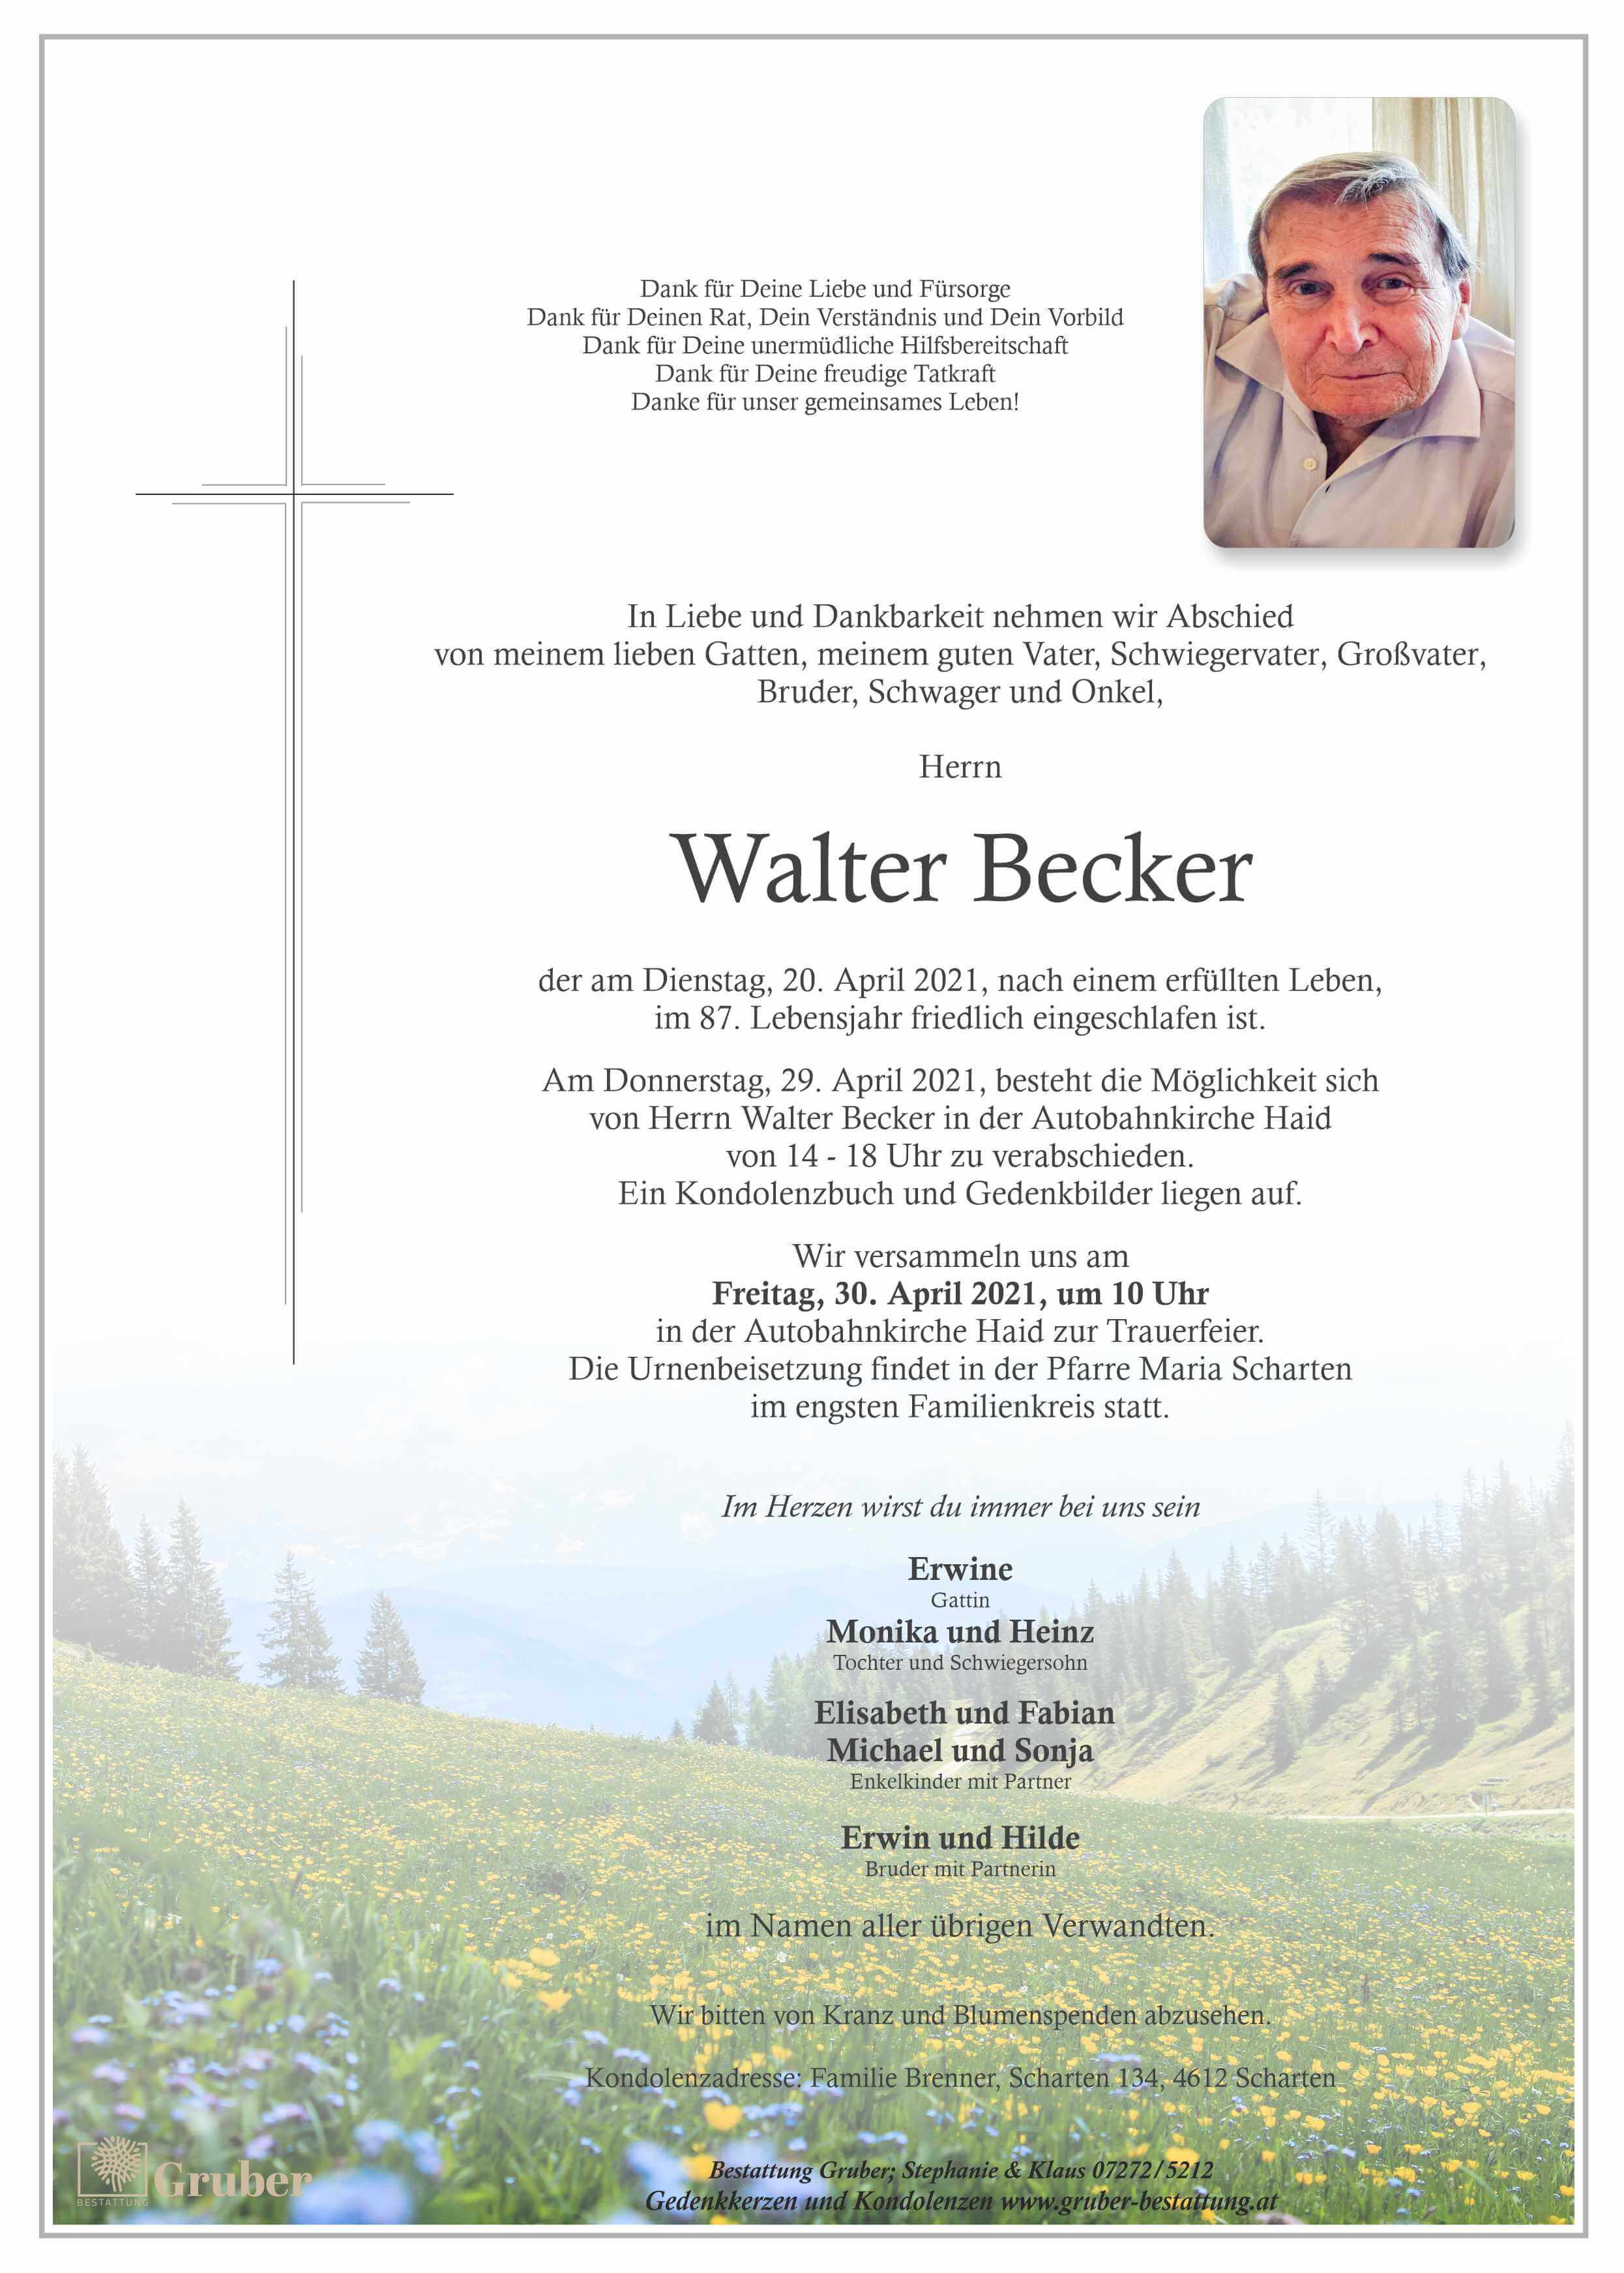 Walter Becker (Haid)